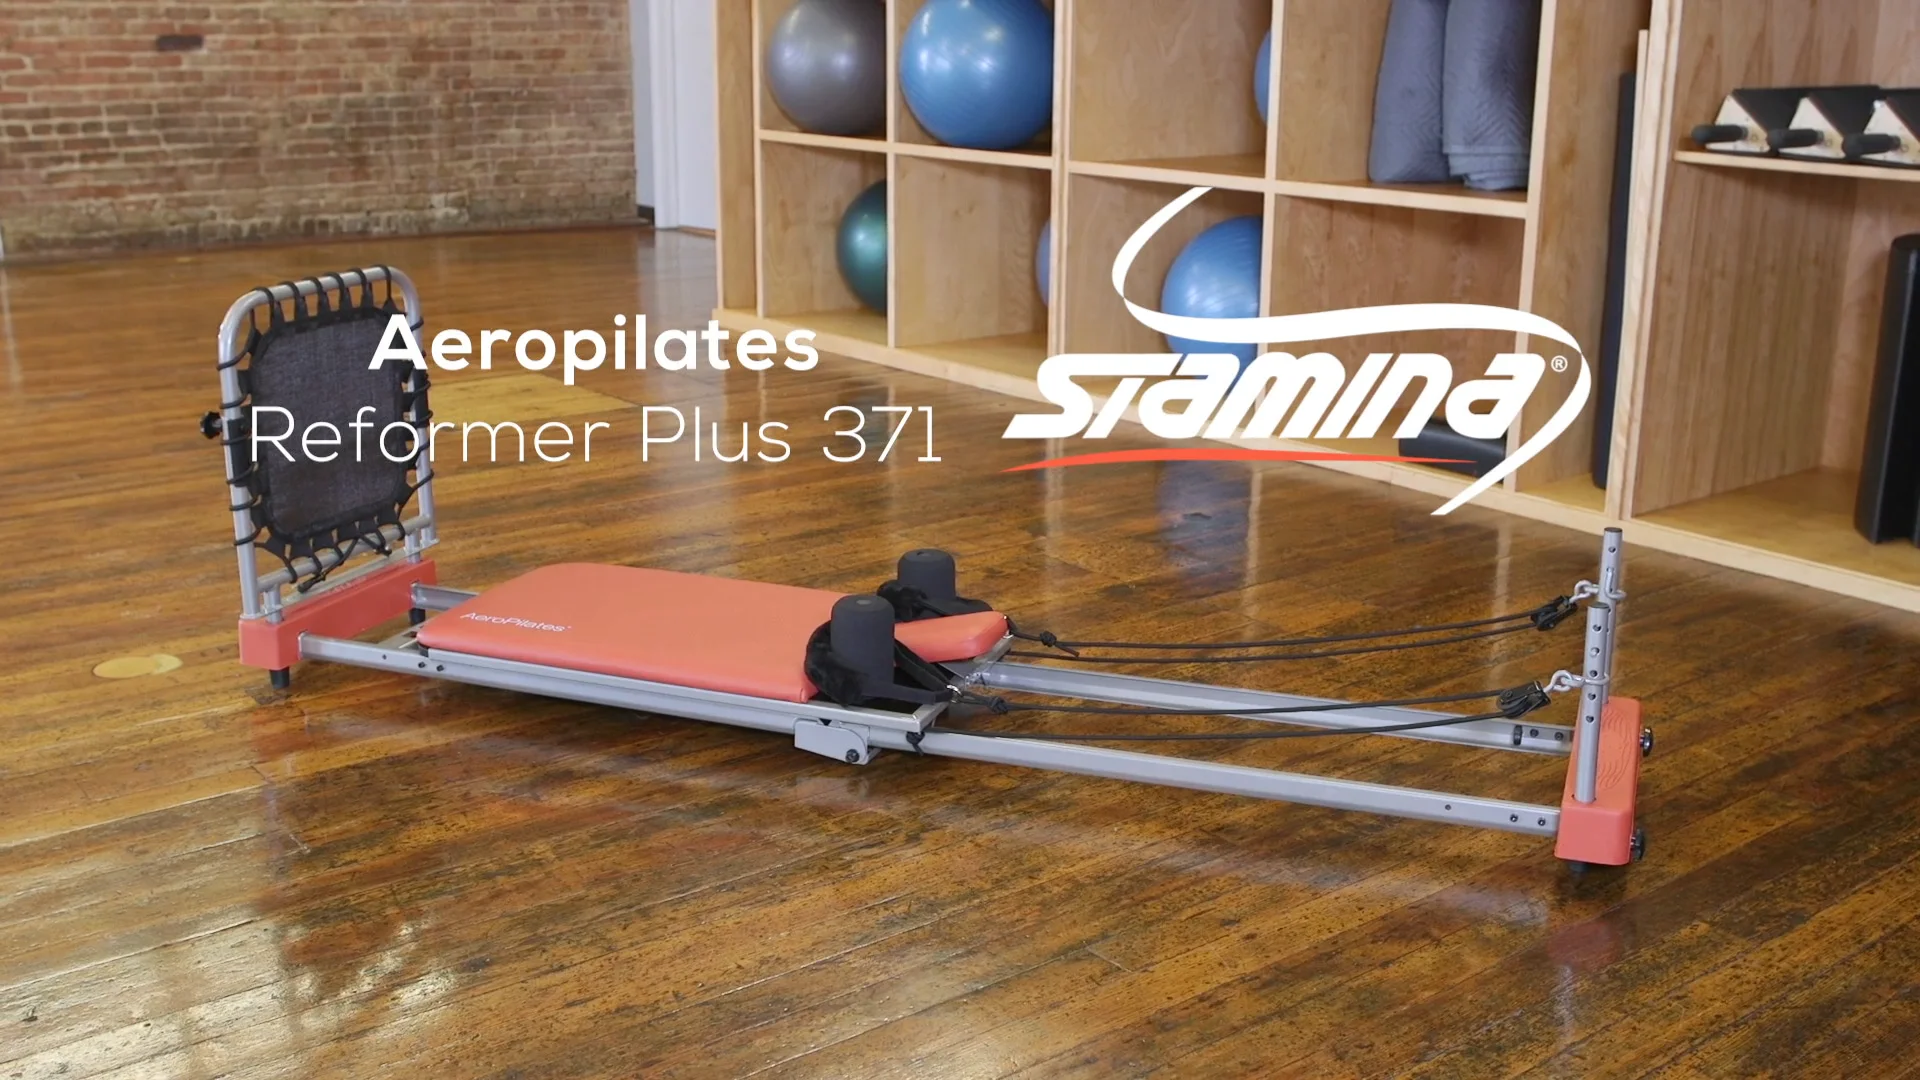 AeroPilates - The Benefits of Pilates on Vimeo